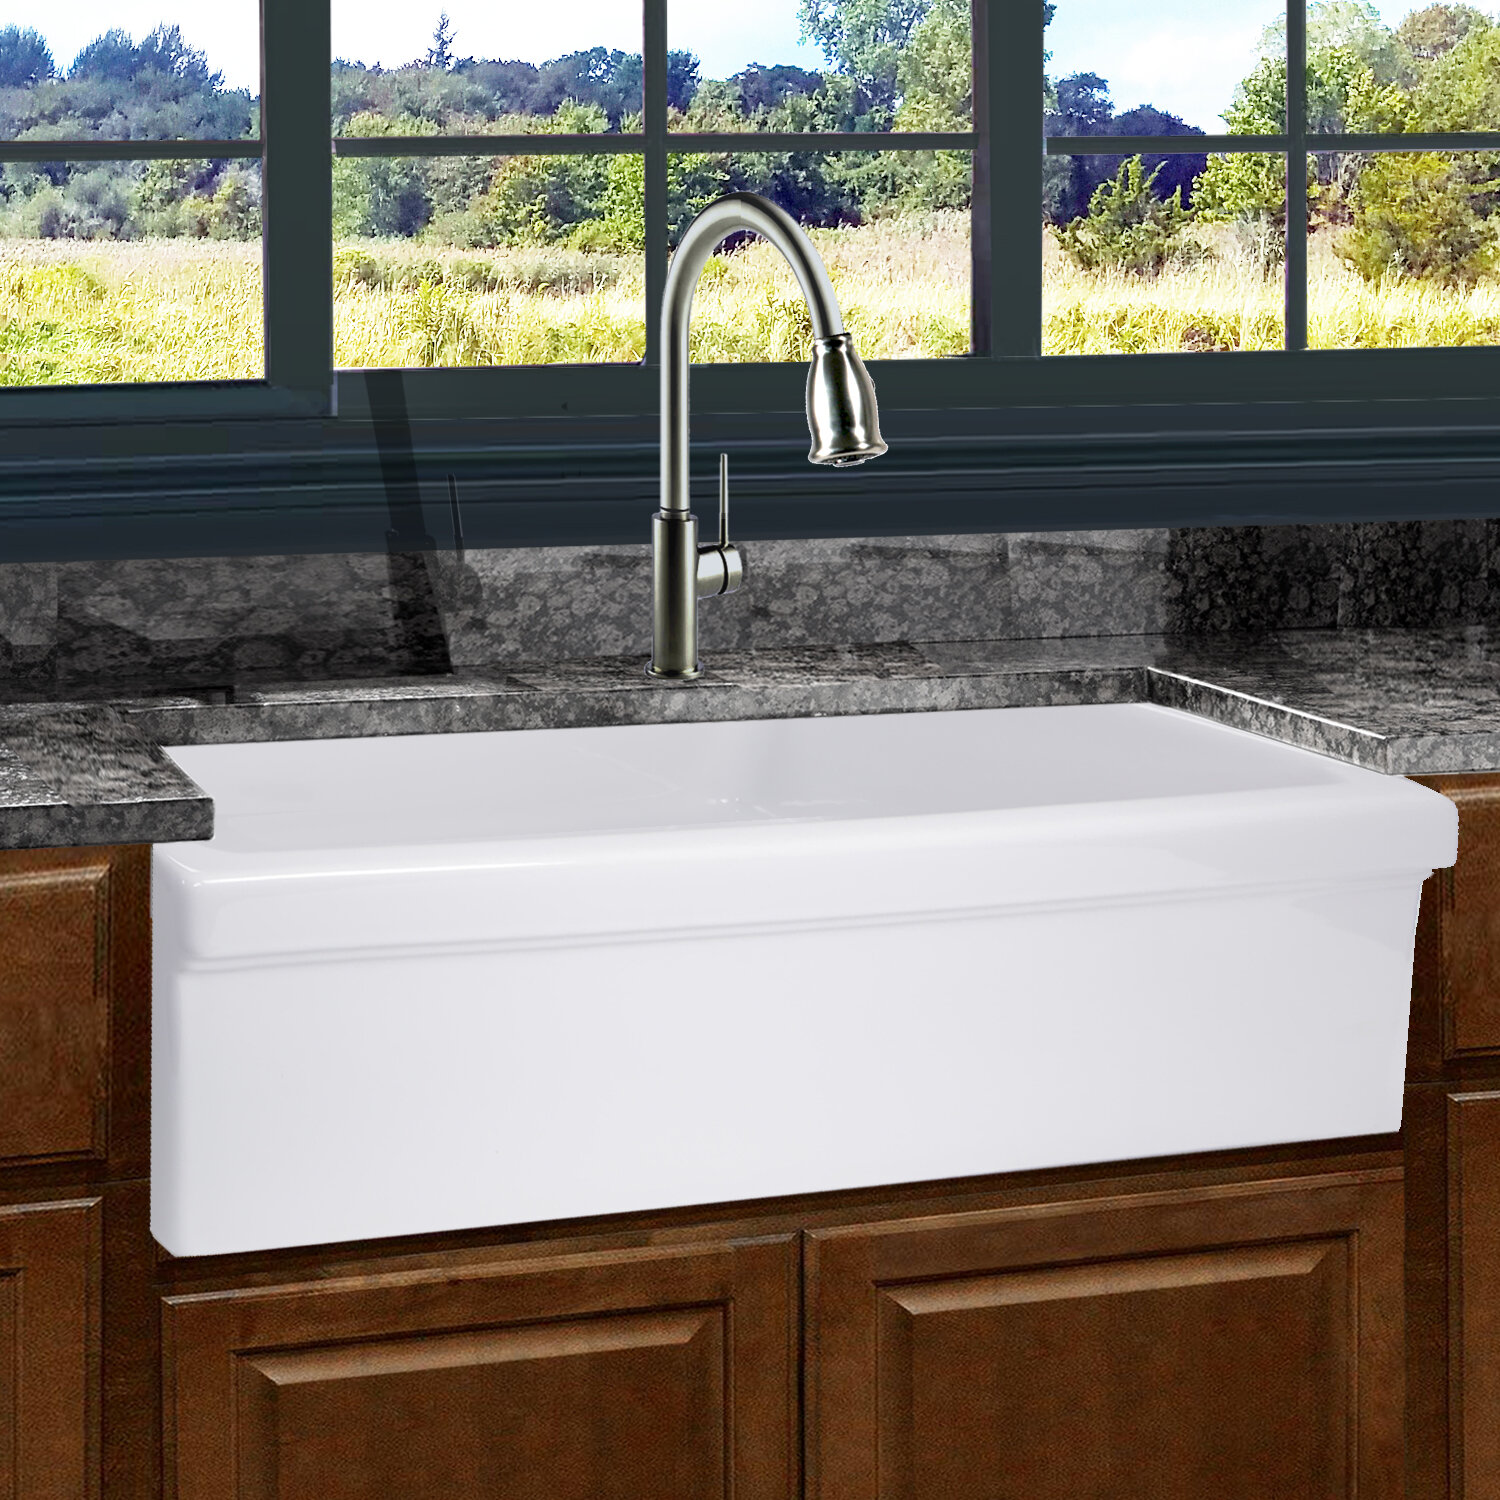 Cape Decorative Apron 36 L X 20 W Single Farmhouse Kitchen Sink